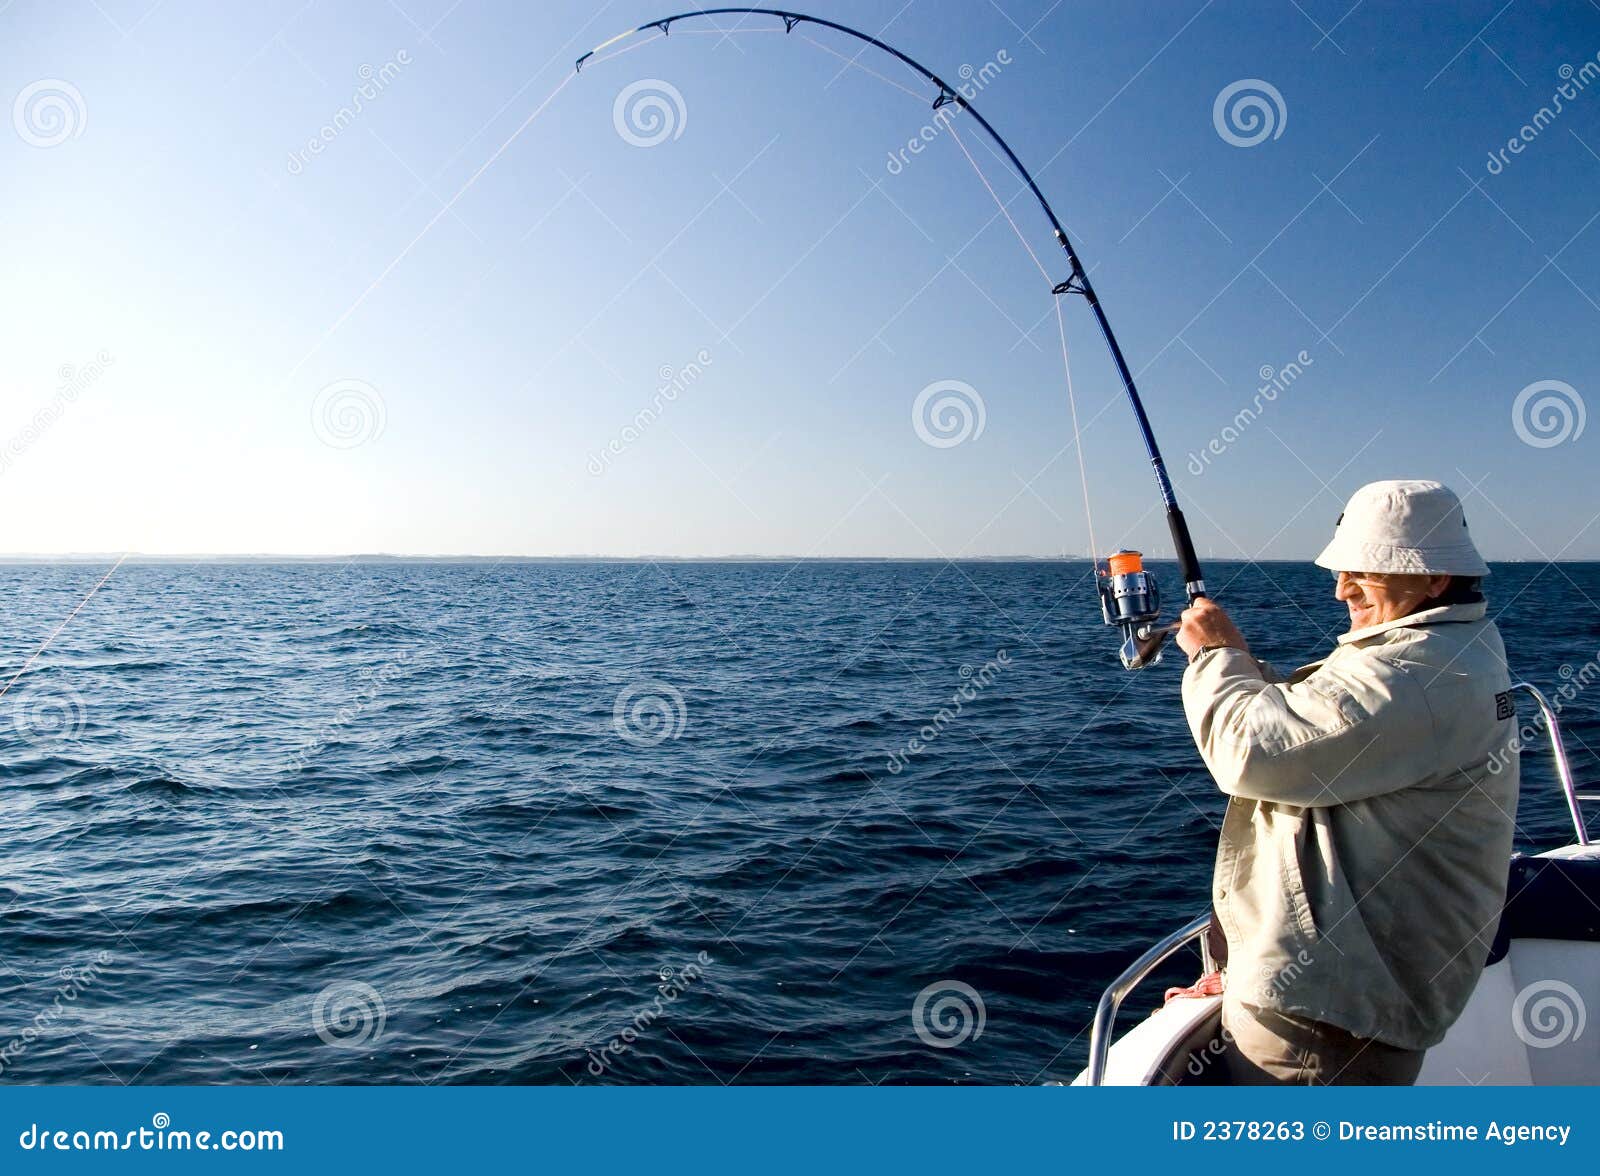 sea-fishing-2378263.jpg